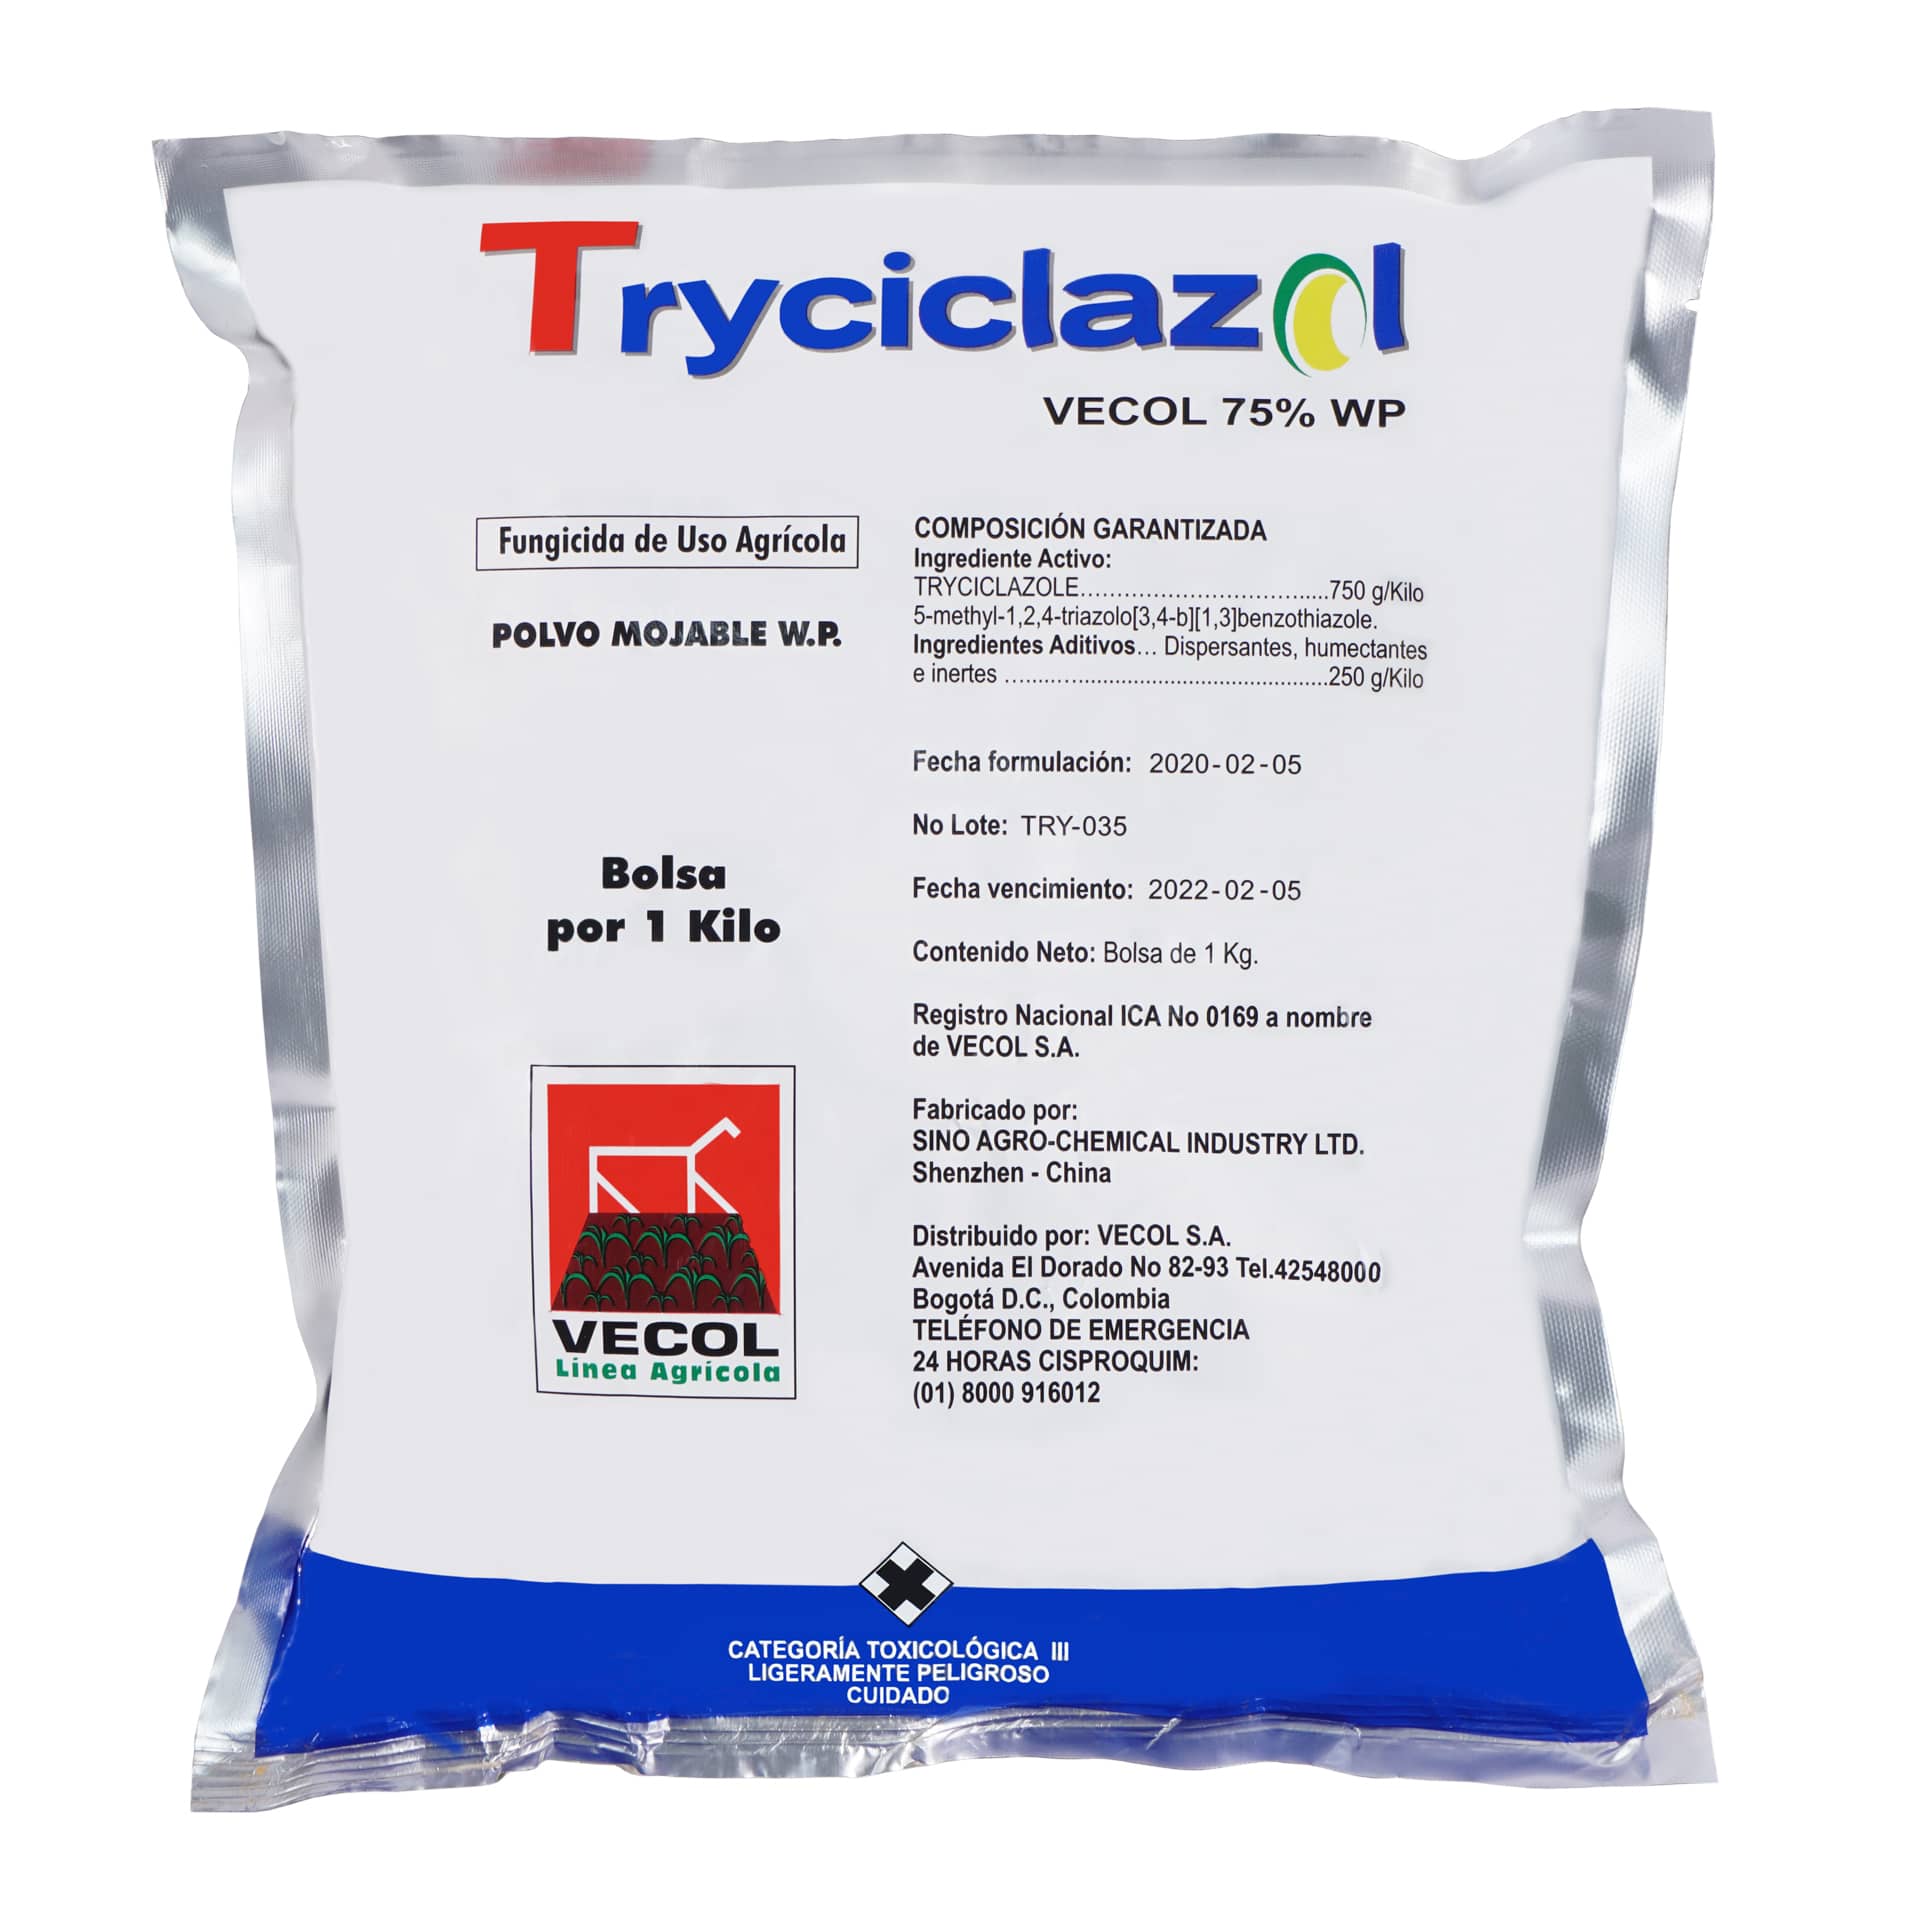 Fungicida - Tryciclazol Vecol 75% WP x 1 Kg